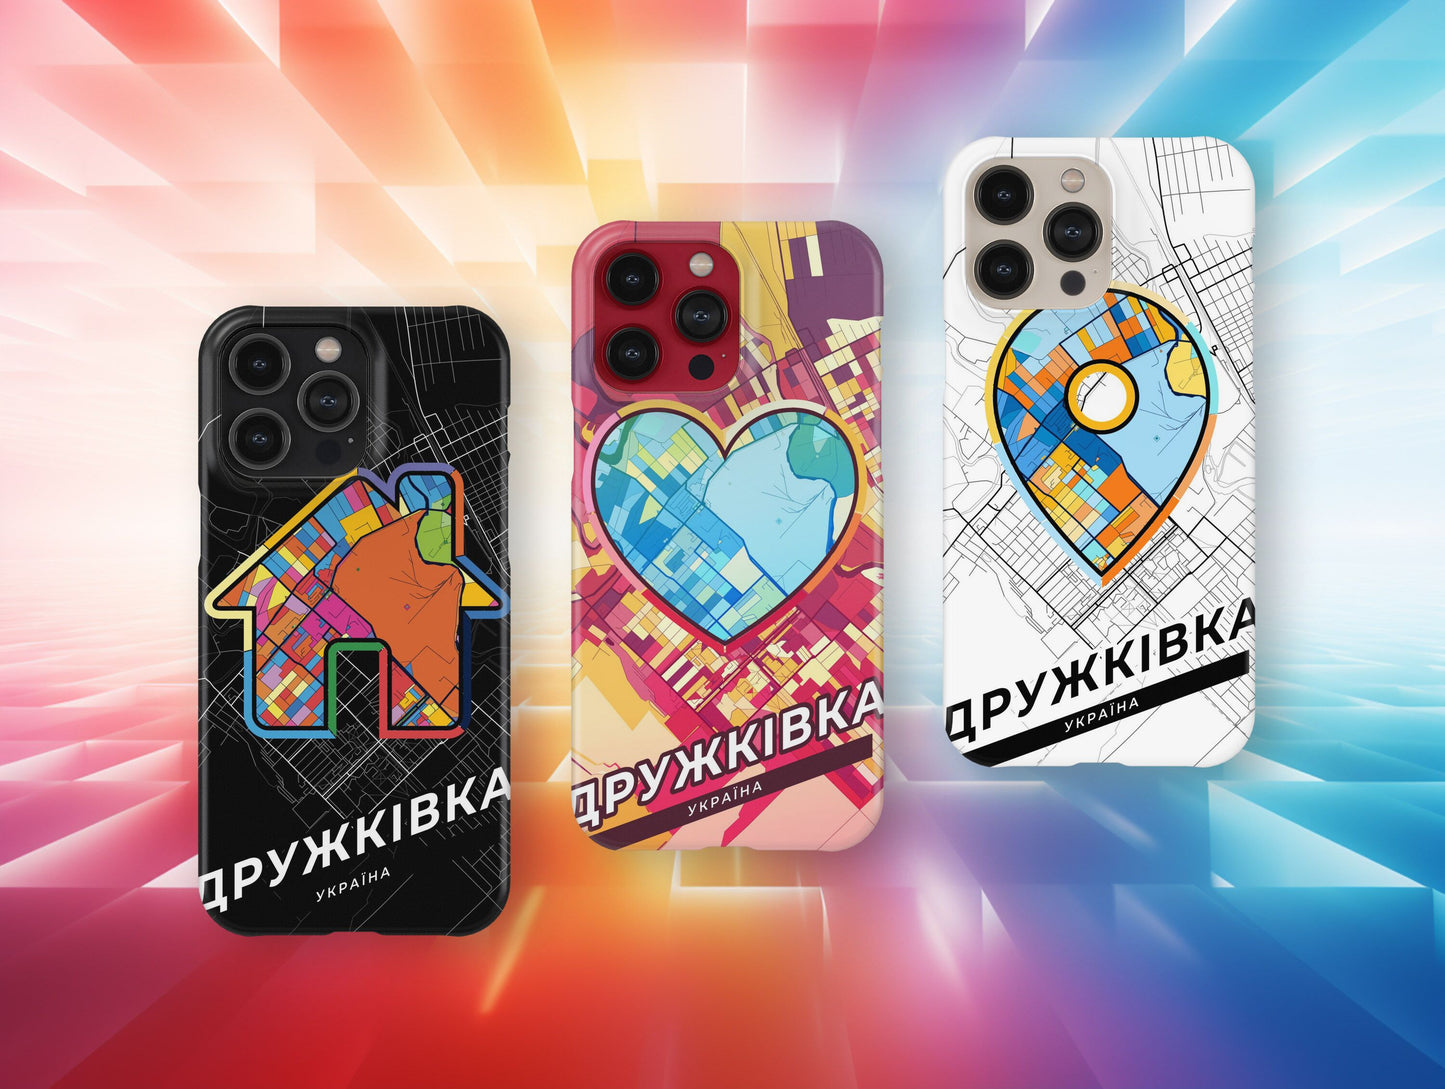 Druzhkivka Ukraine slim phone case with colorful icon. Birthday, wedding or housewarming gift. Couple match cases.